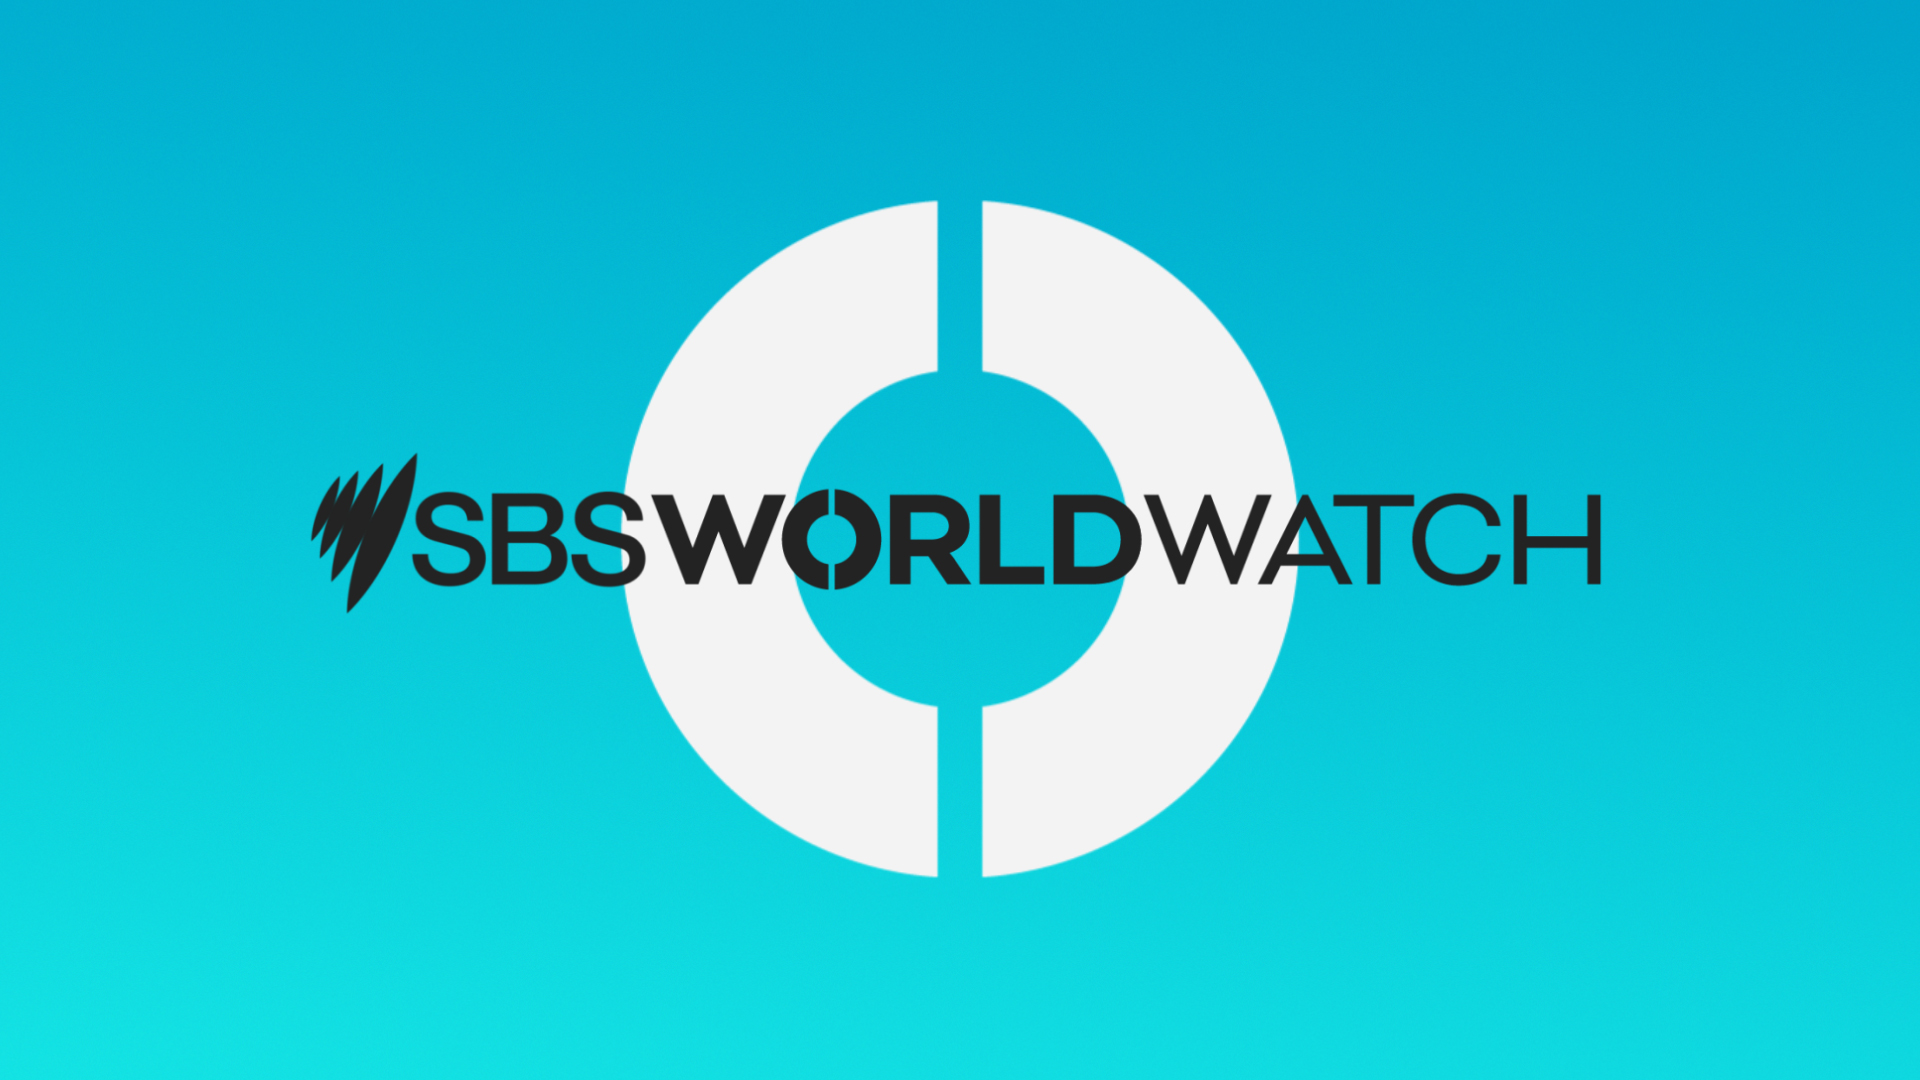 SBS WorldWatch Logo and Visual Identity by Hulsbosch